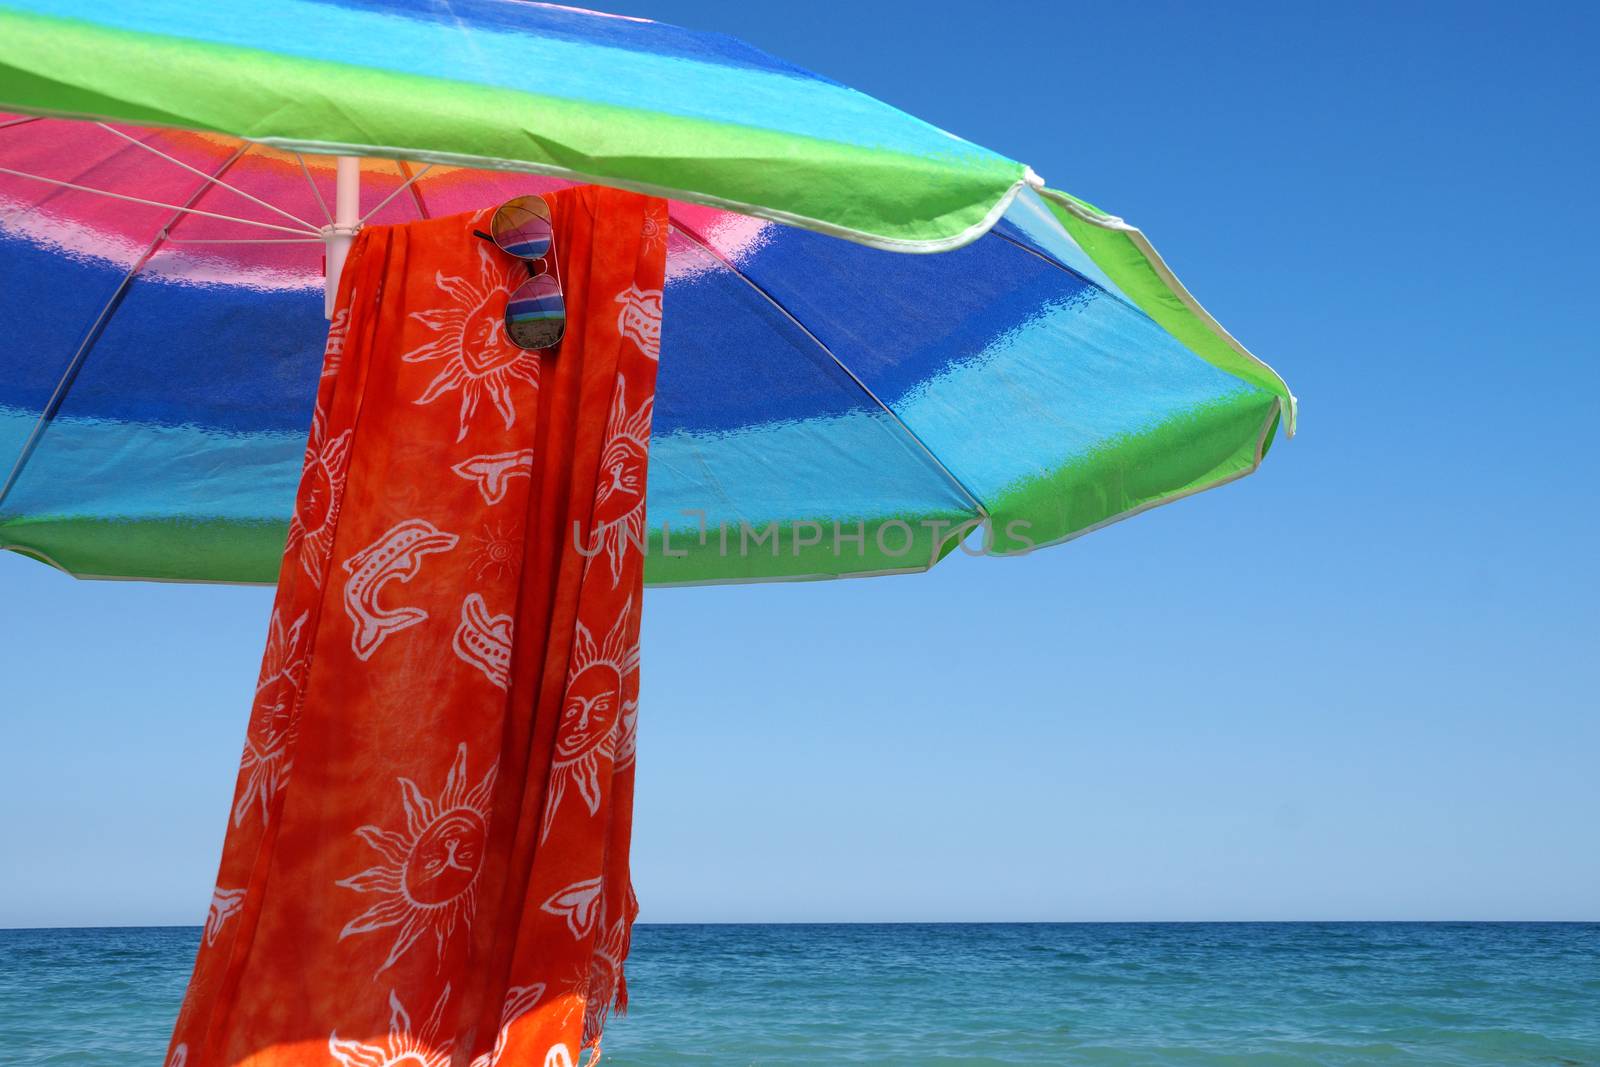 beach umbrella, pareo and sunglasses against the sea horizon and clear sky, copy space.